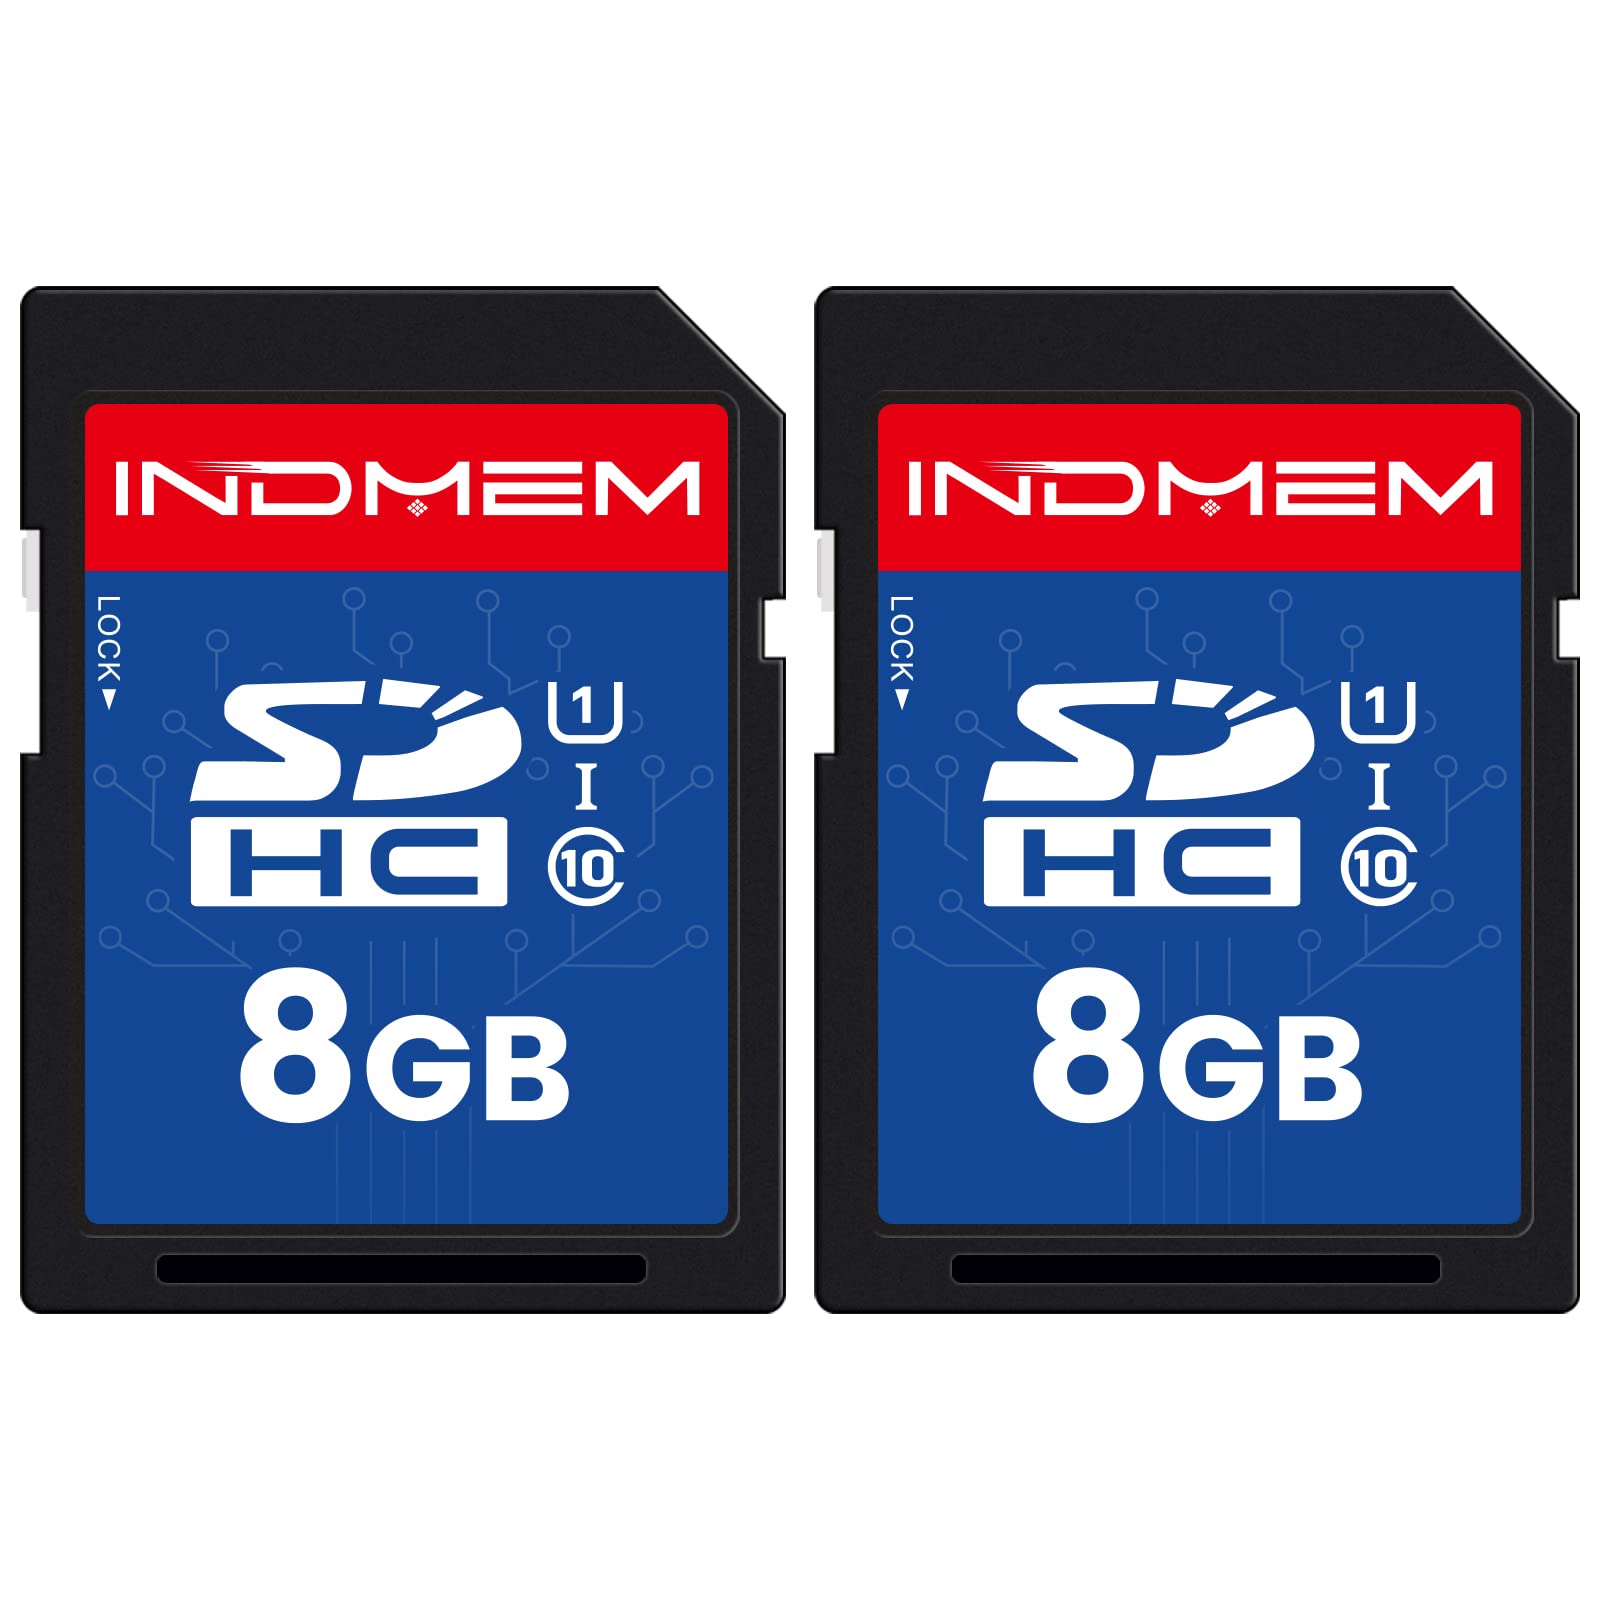 INDMEM SD-Karte 8GB 2 Pack UHS-I U1 Class 10 8G SDHC Flash Speicherkarte kompatibel mit Digitalkamera, Computer, Trail-Kameras